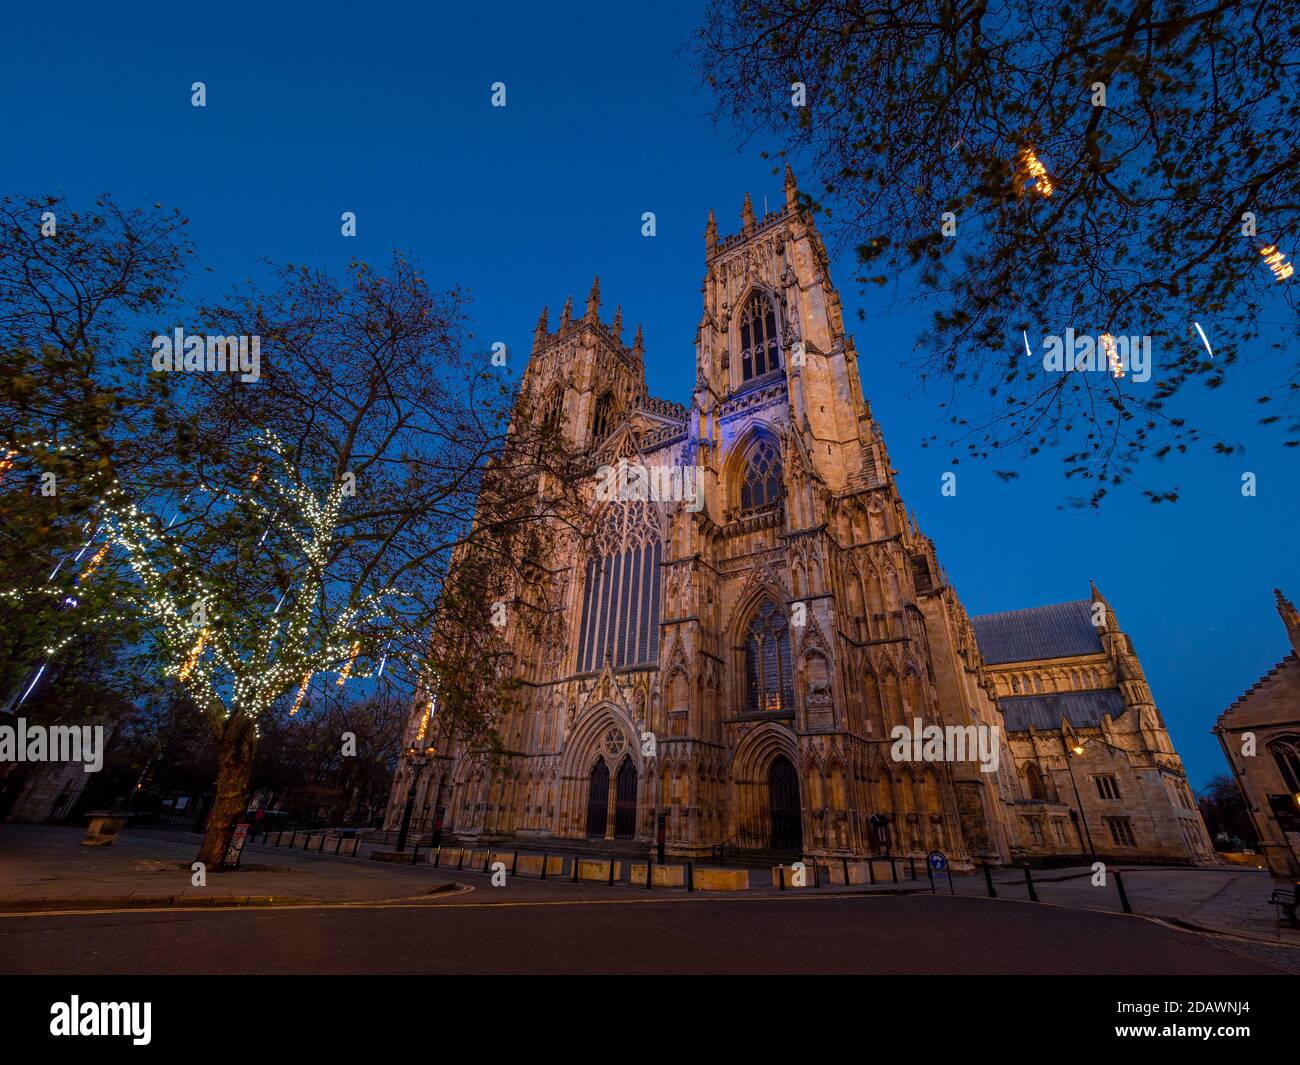 York Minster with Festive Christmas illuminations at dusk, York, UK Stock Photo